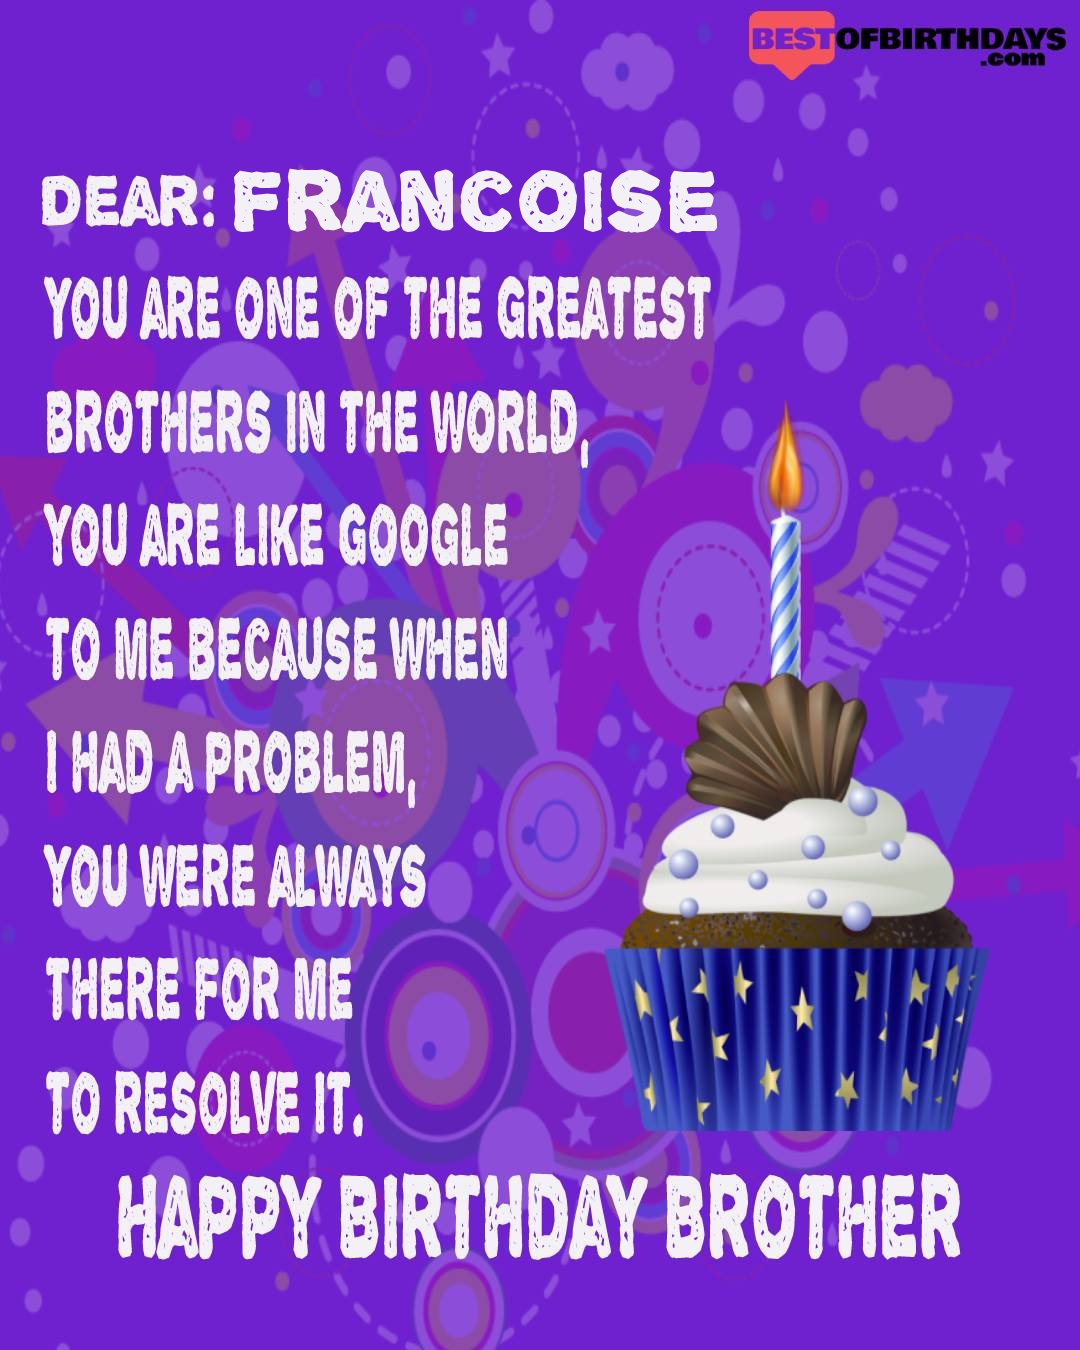 Happy birthday francoise bhai brother bro